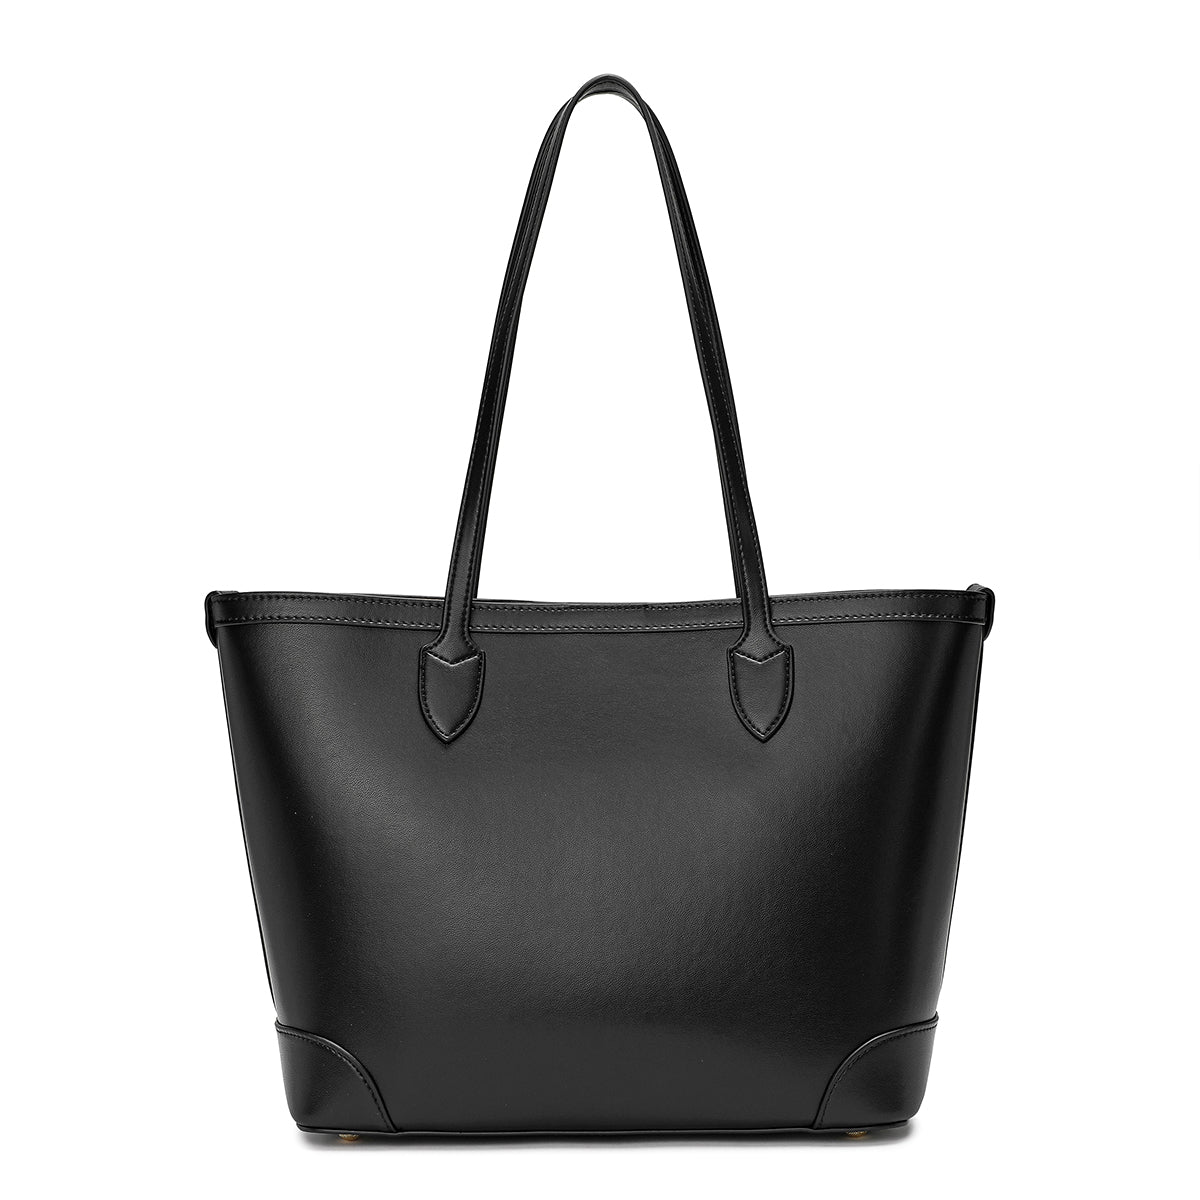 A luxurious bag made of 100% microfiber, wide, 39 cm wide, black colour